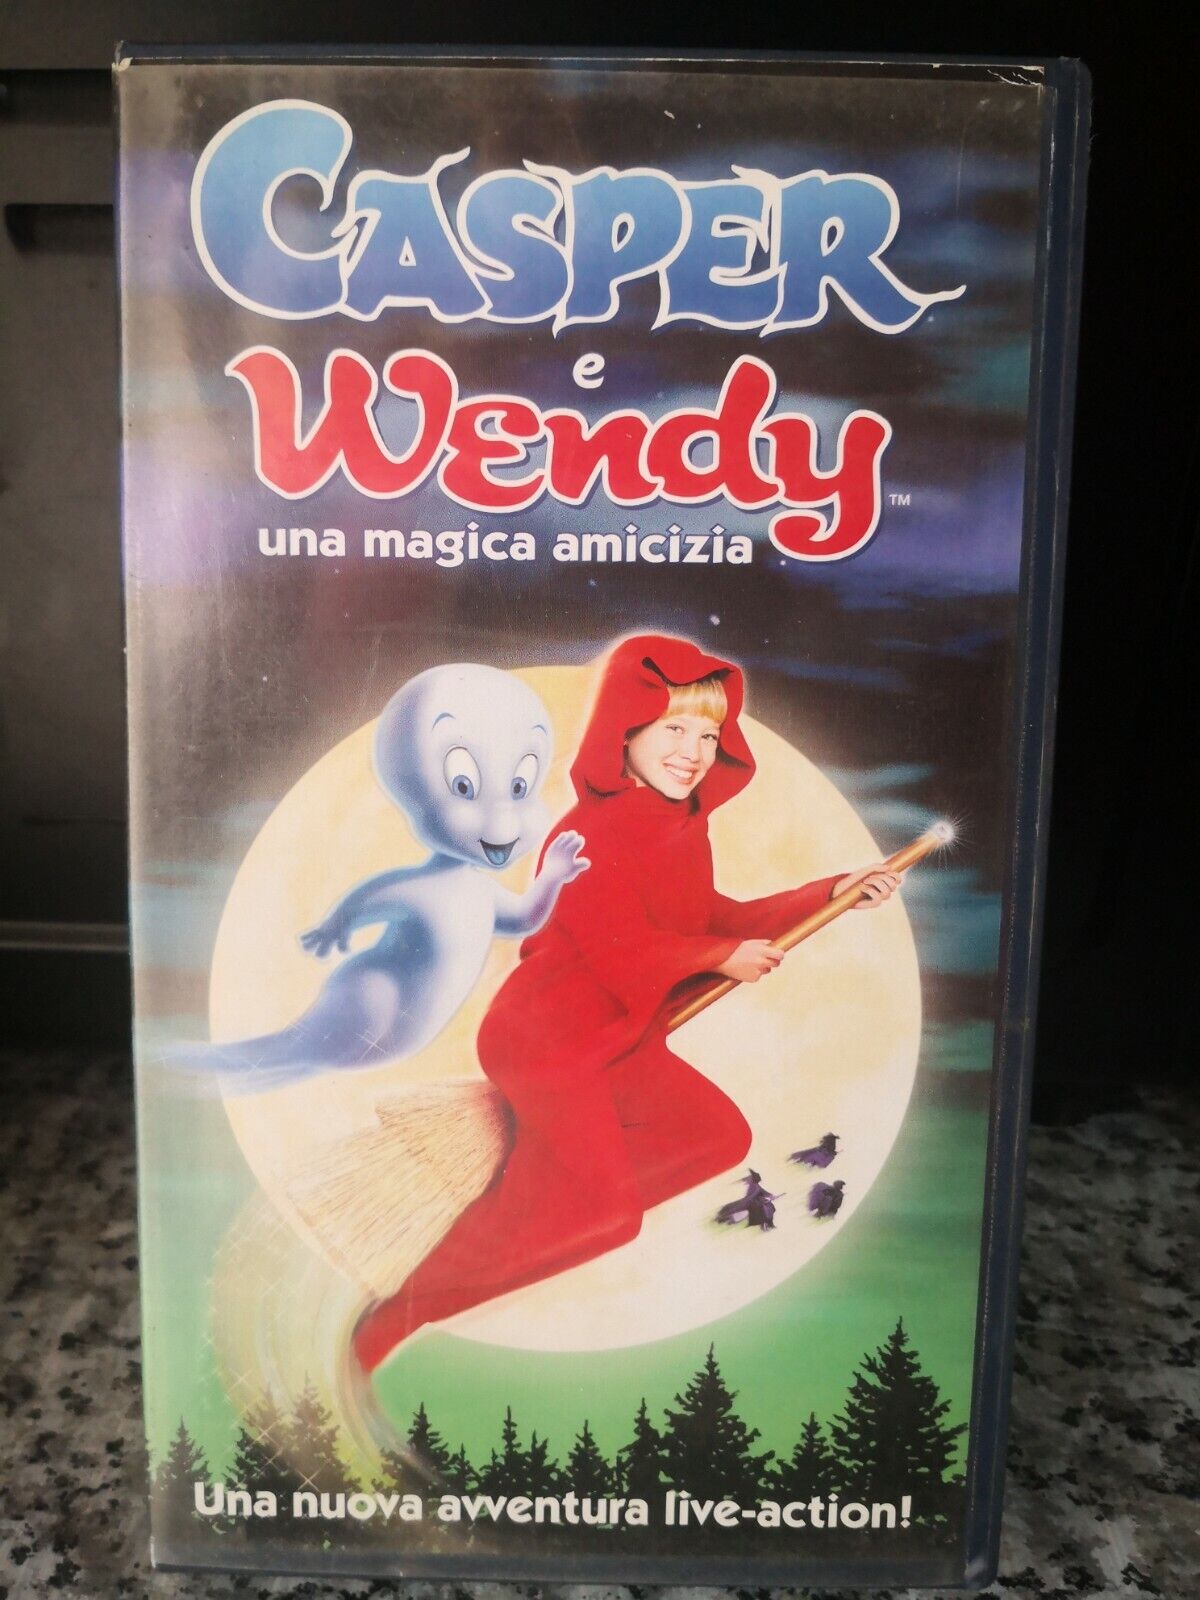 Casper e Wendy una magica amicizia - vhs - 1999 - Univideo -F